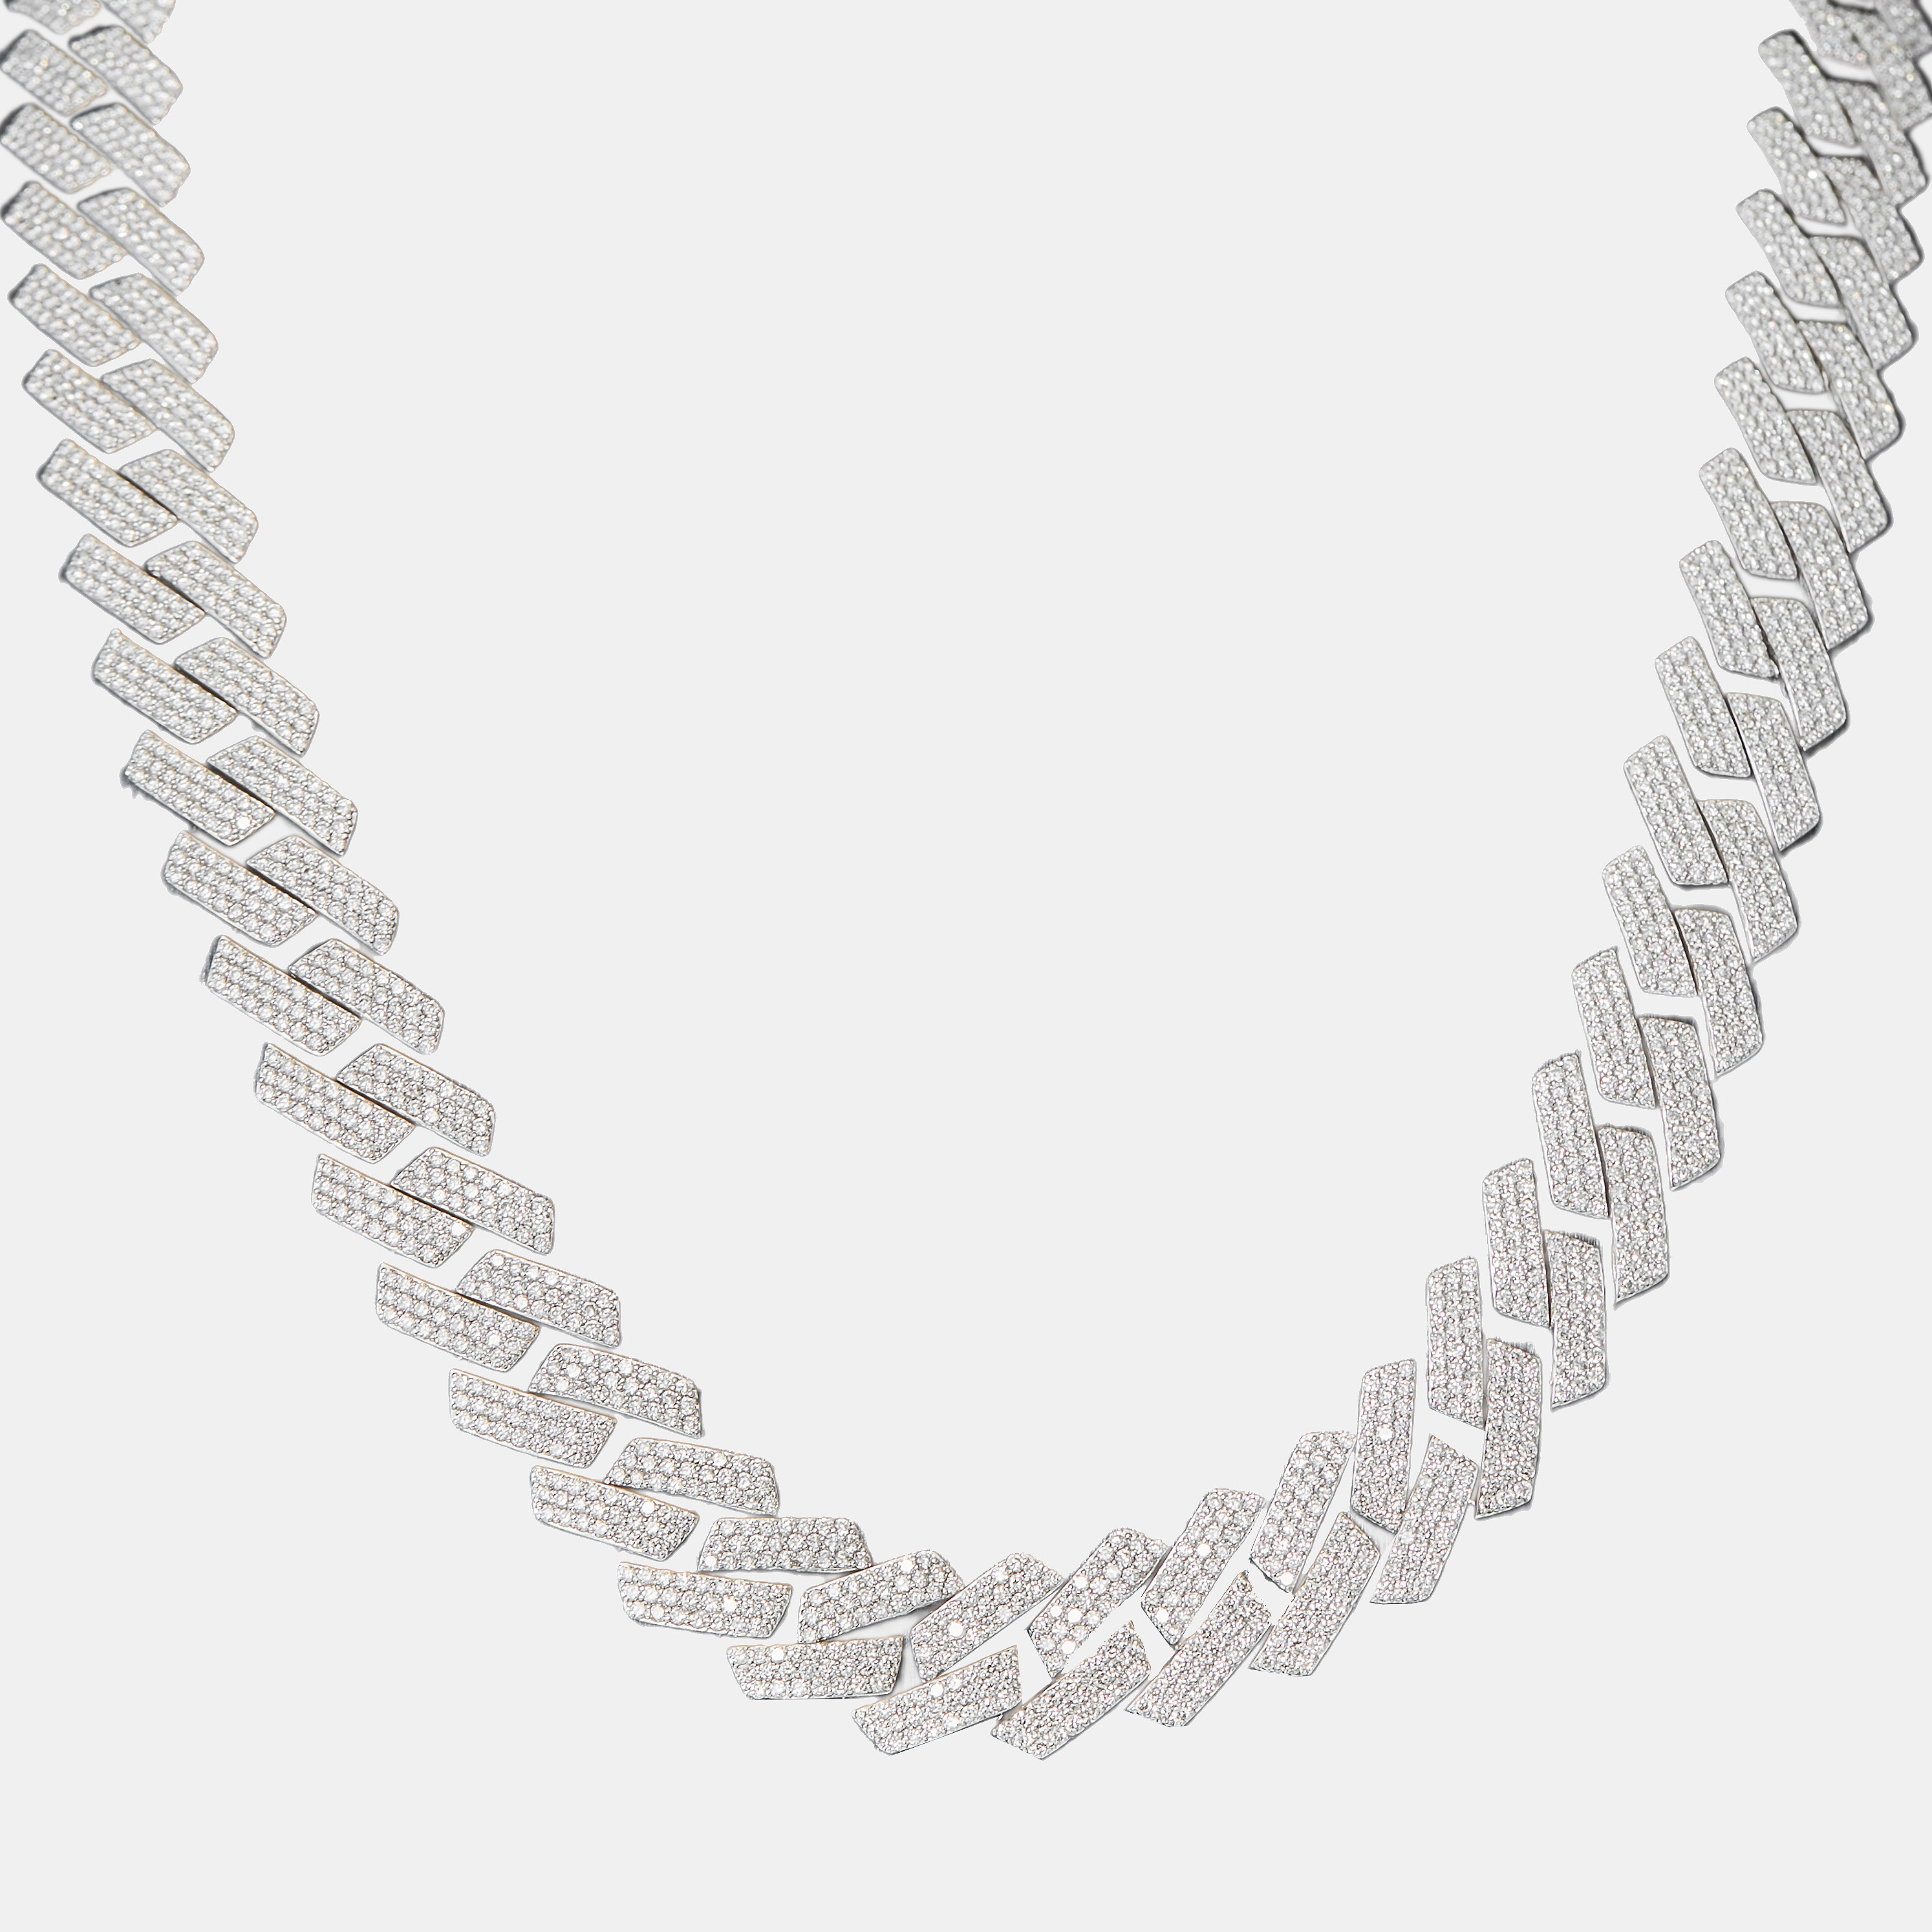 The diamond edit 18k white gold 32.65 ct diamond necklace